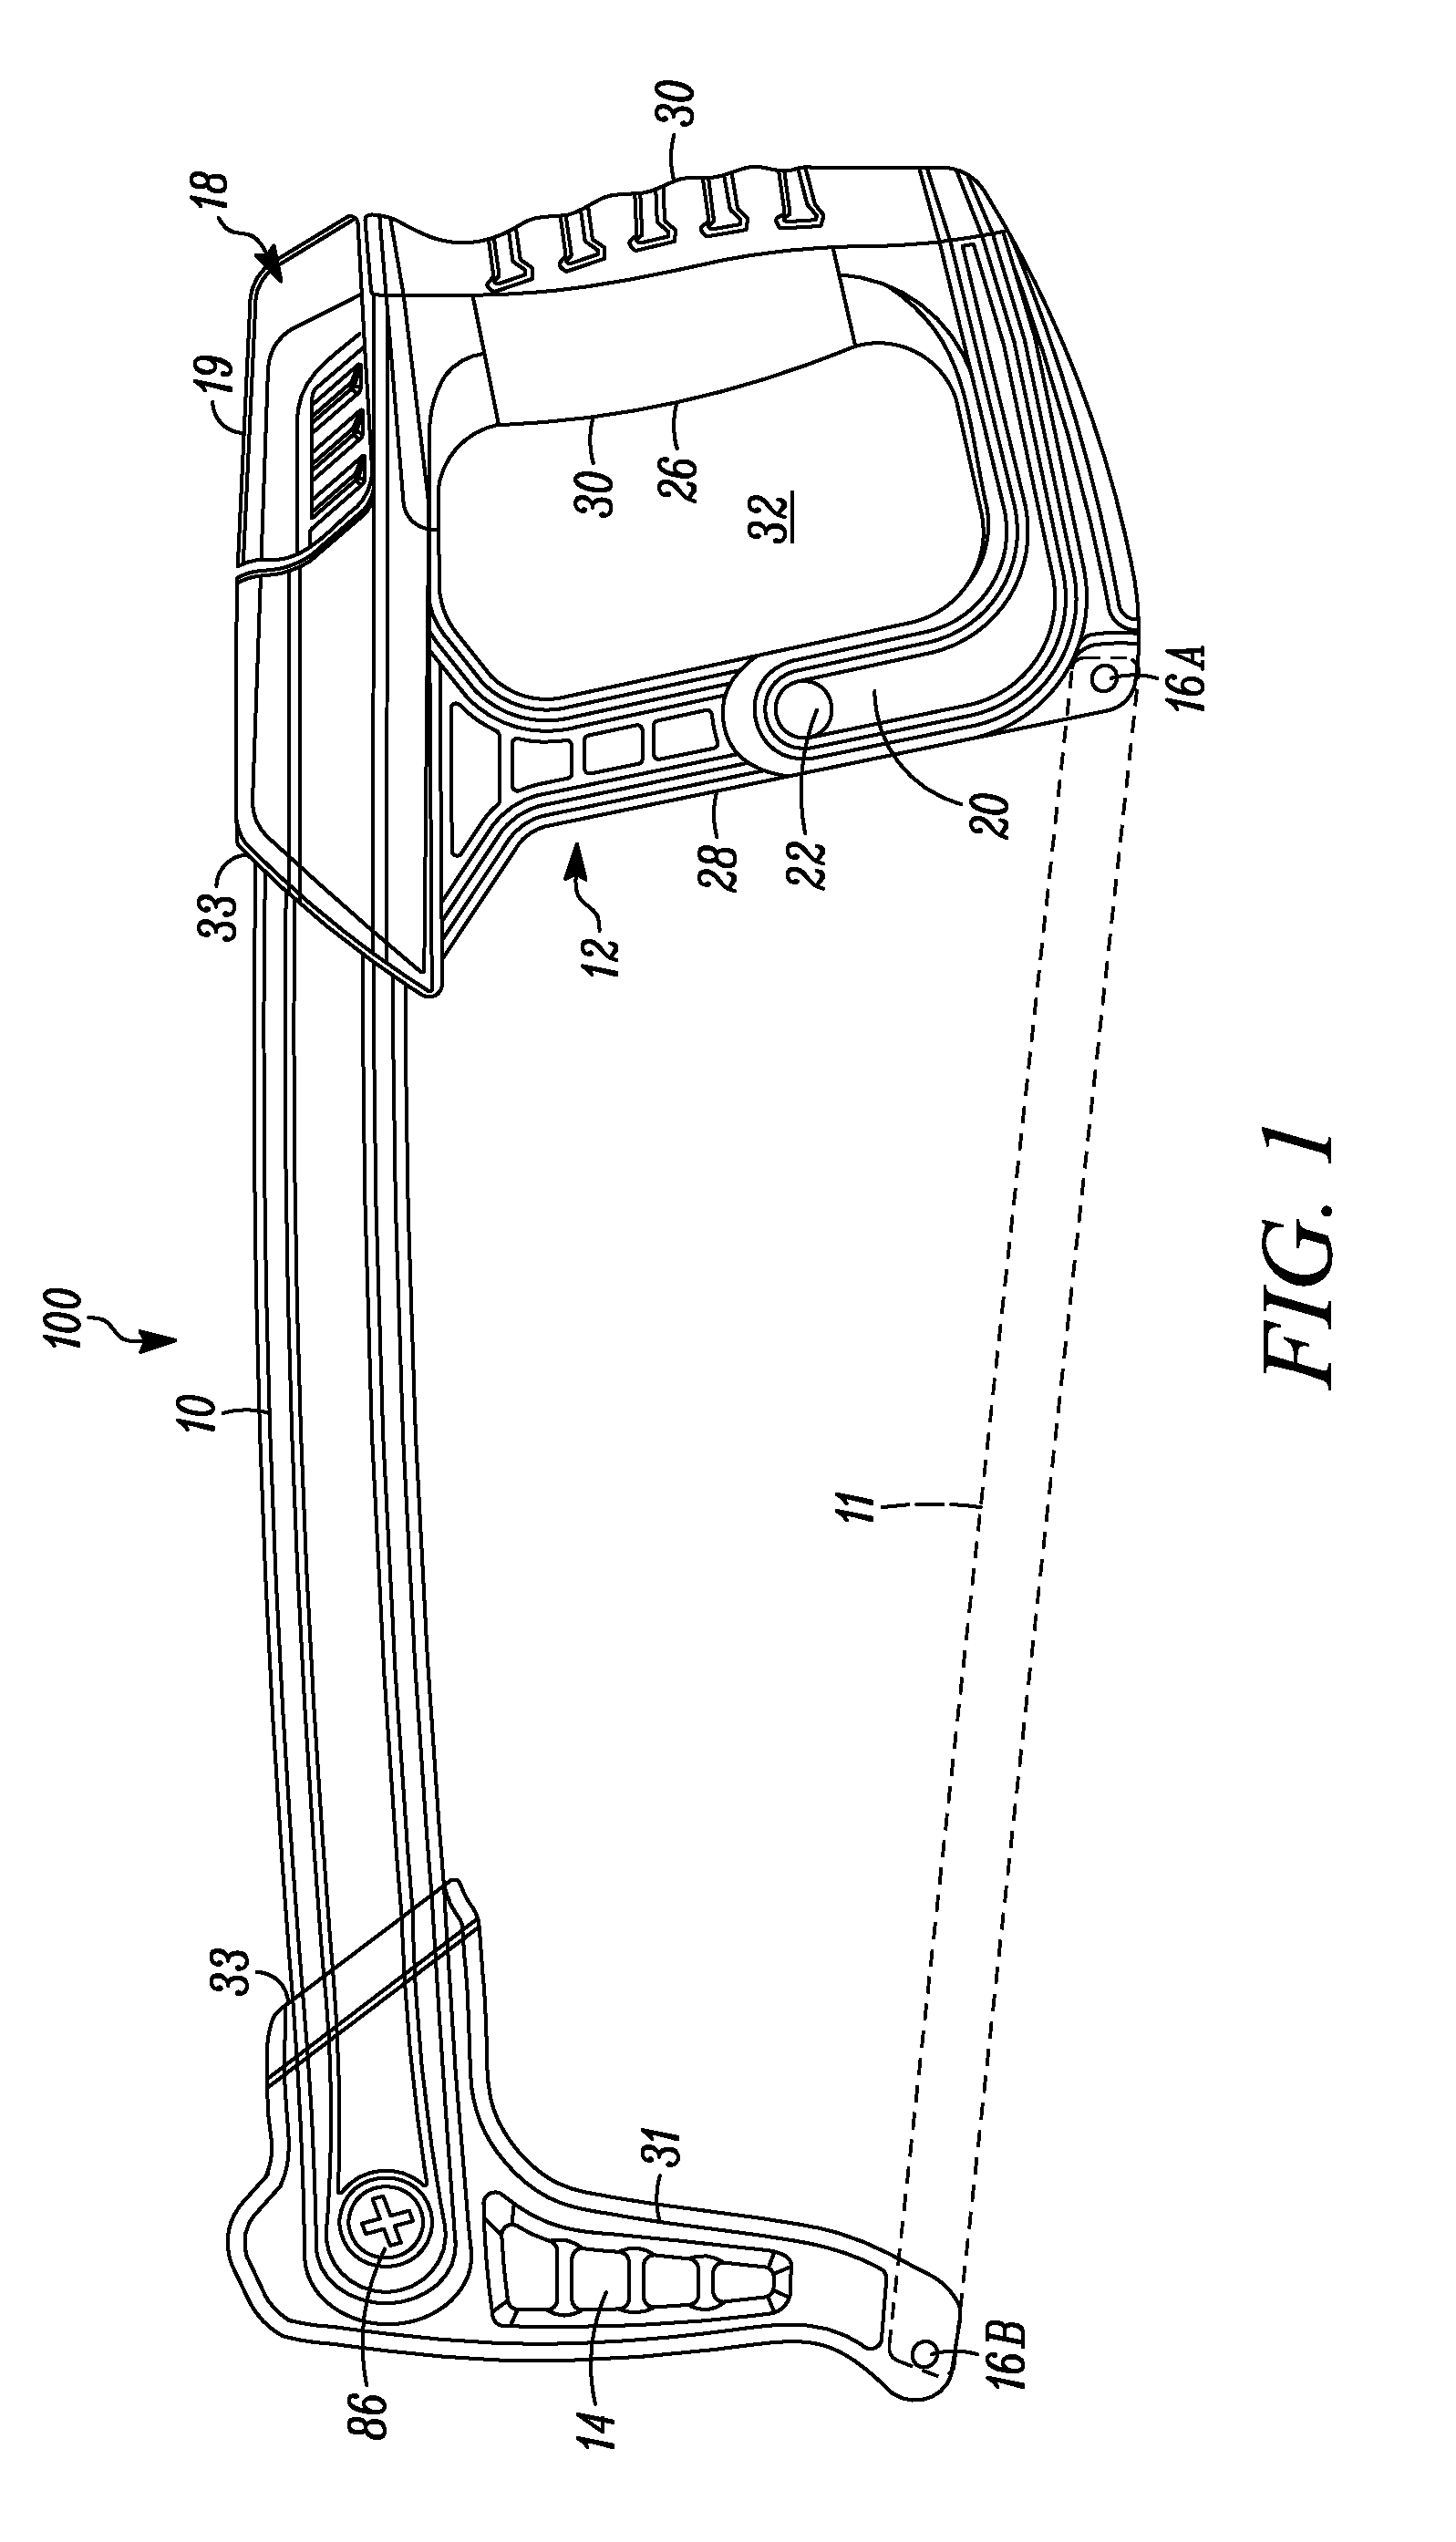 Hacksaw with blade tensioning mechanism